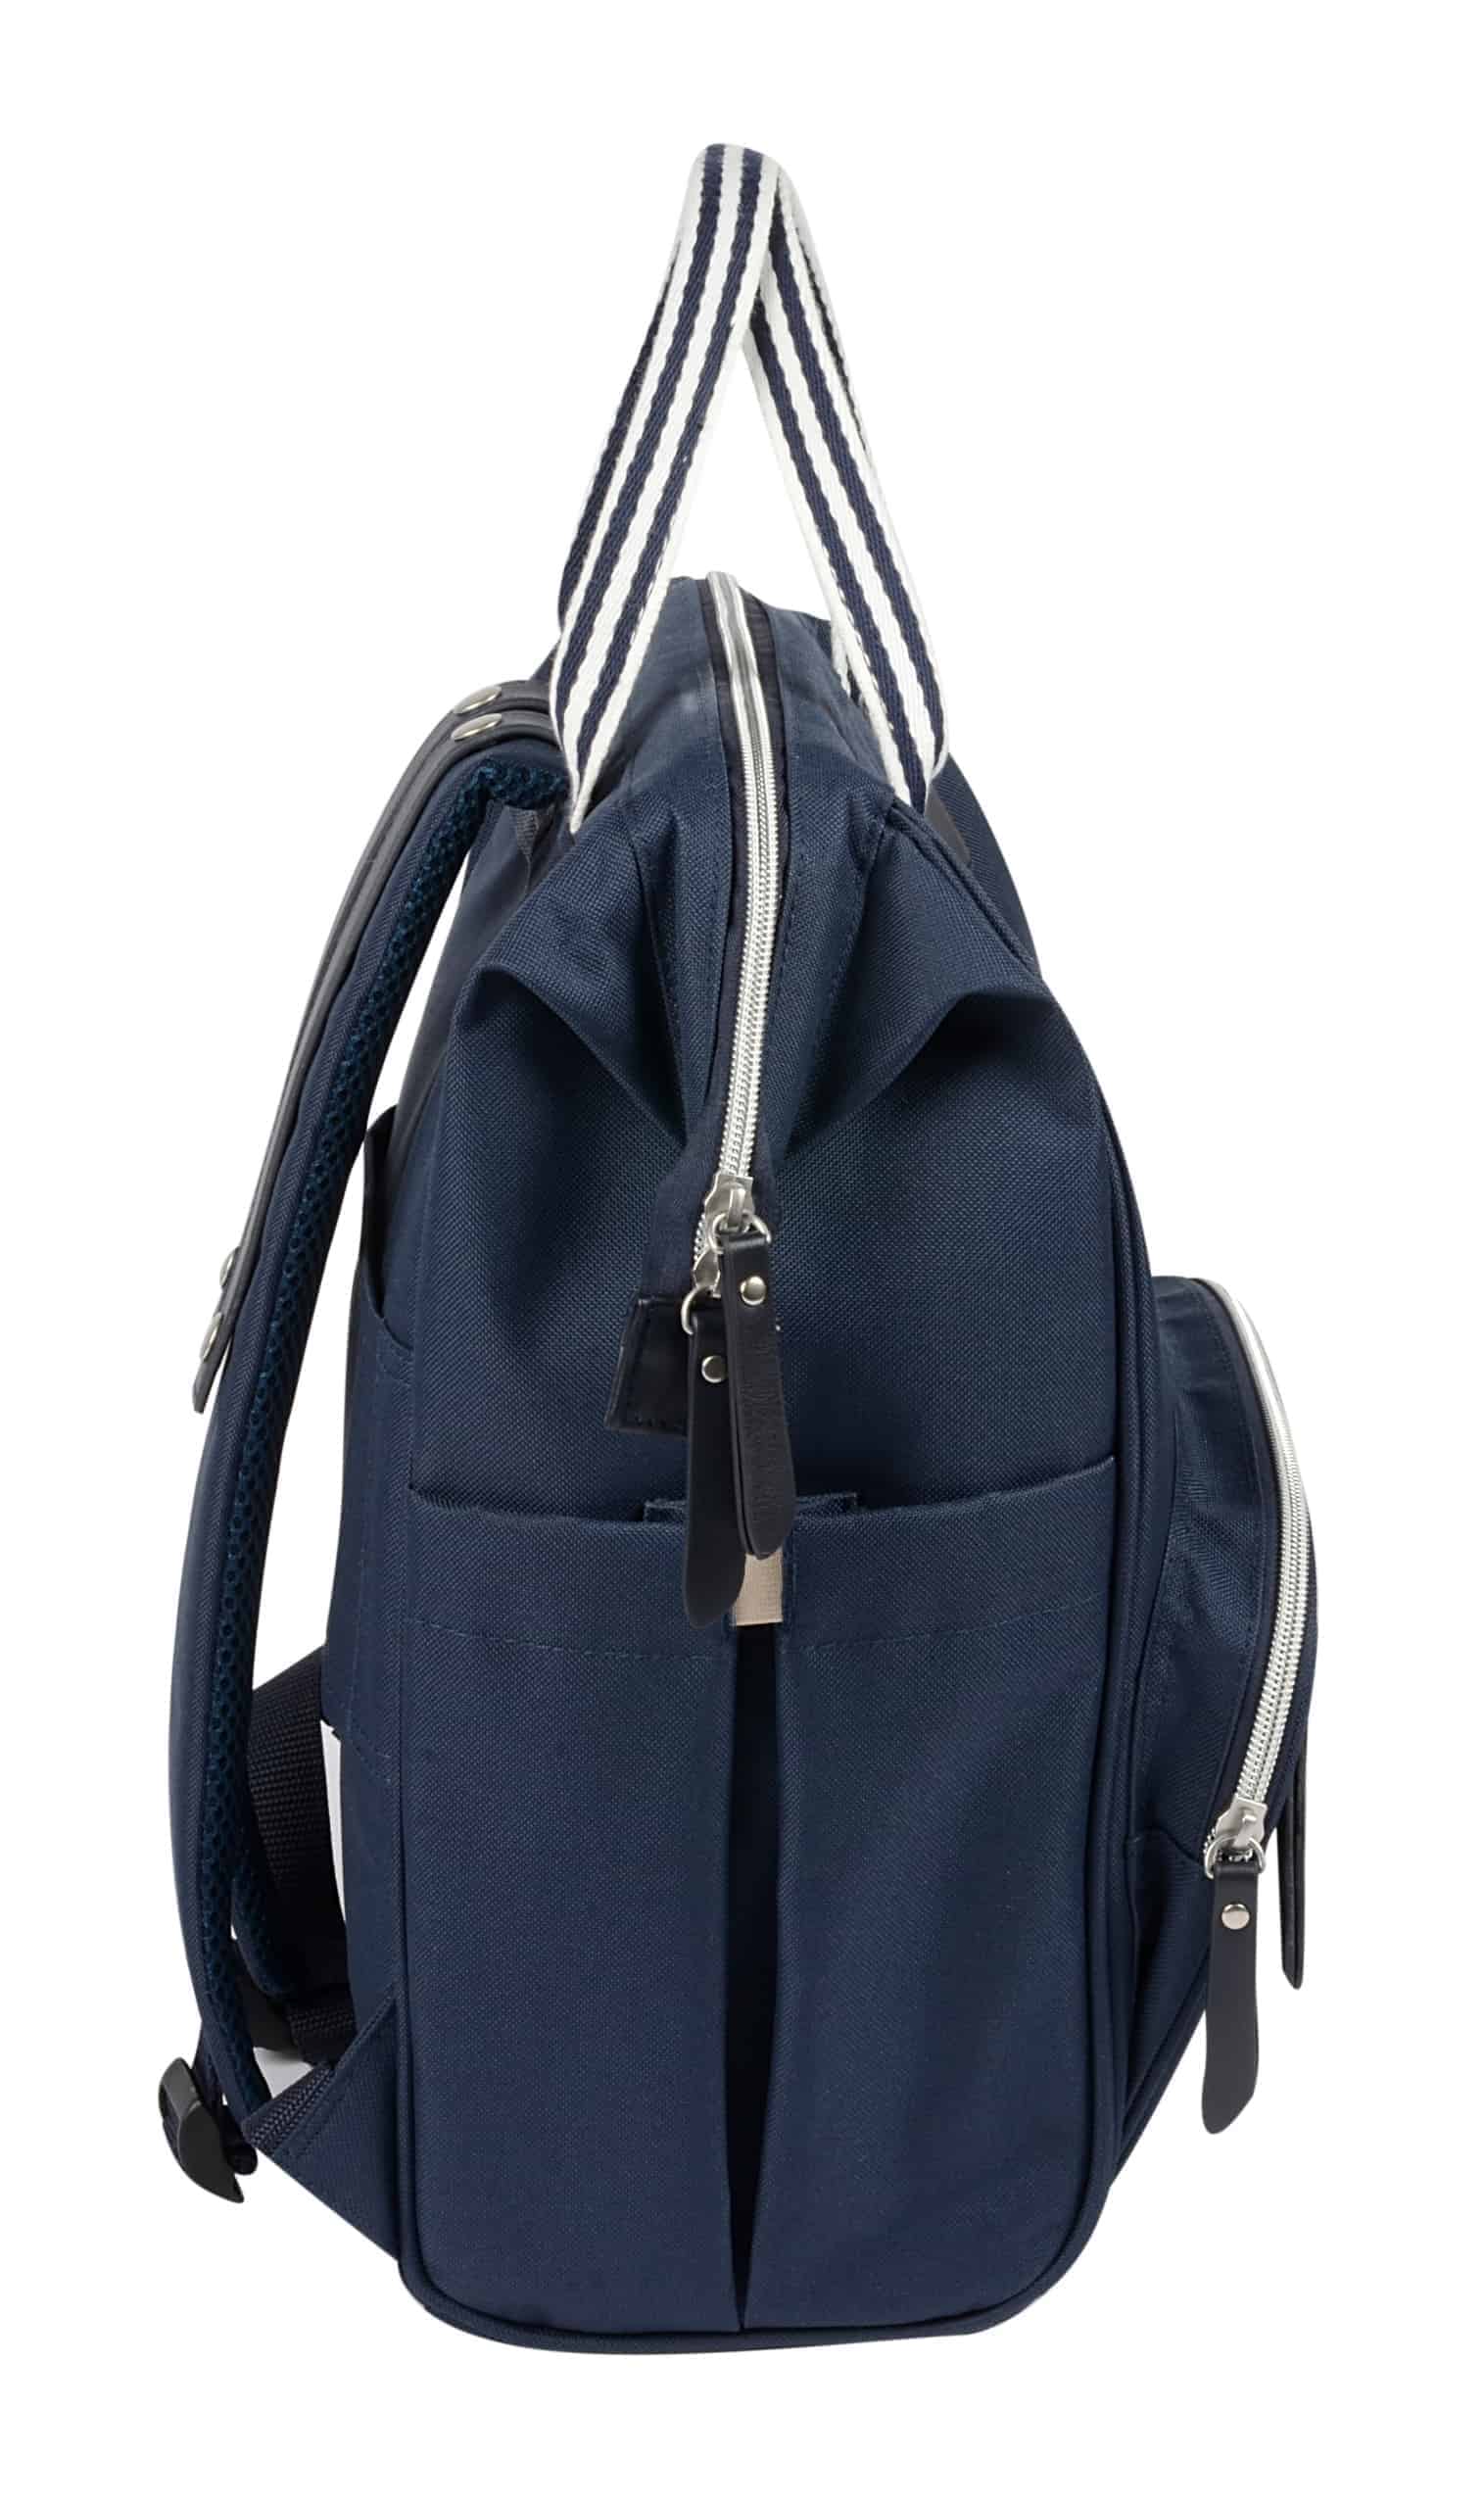 Wellington Backpack Diaper Bag Navy